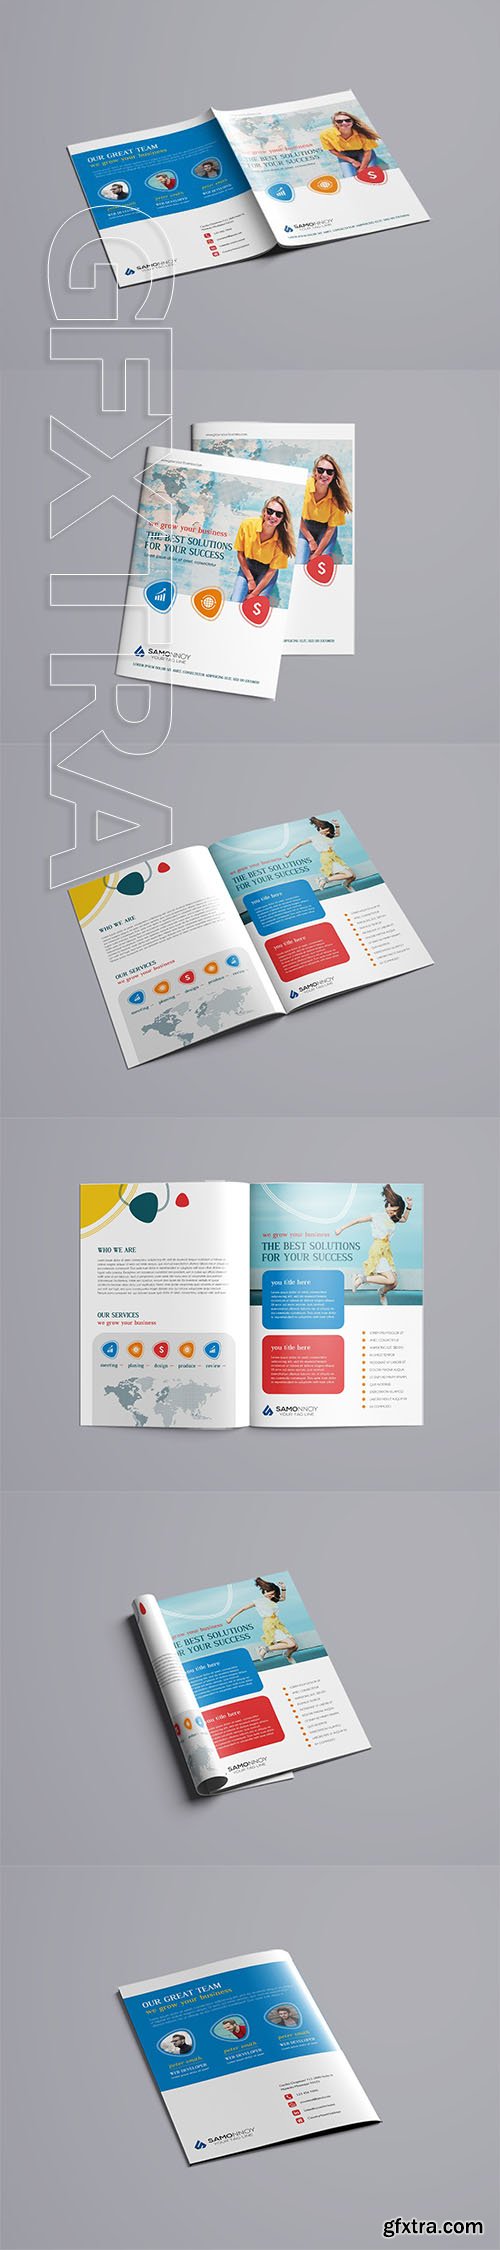 CreativeMarket - Bi-Fold Brochure PSD Template 3281753